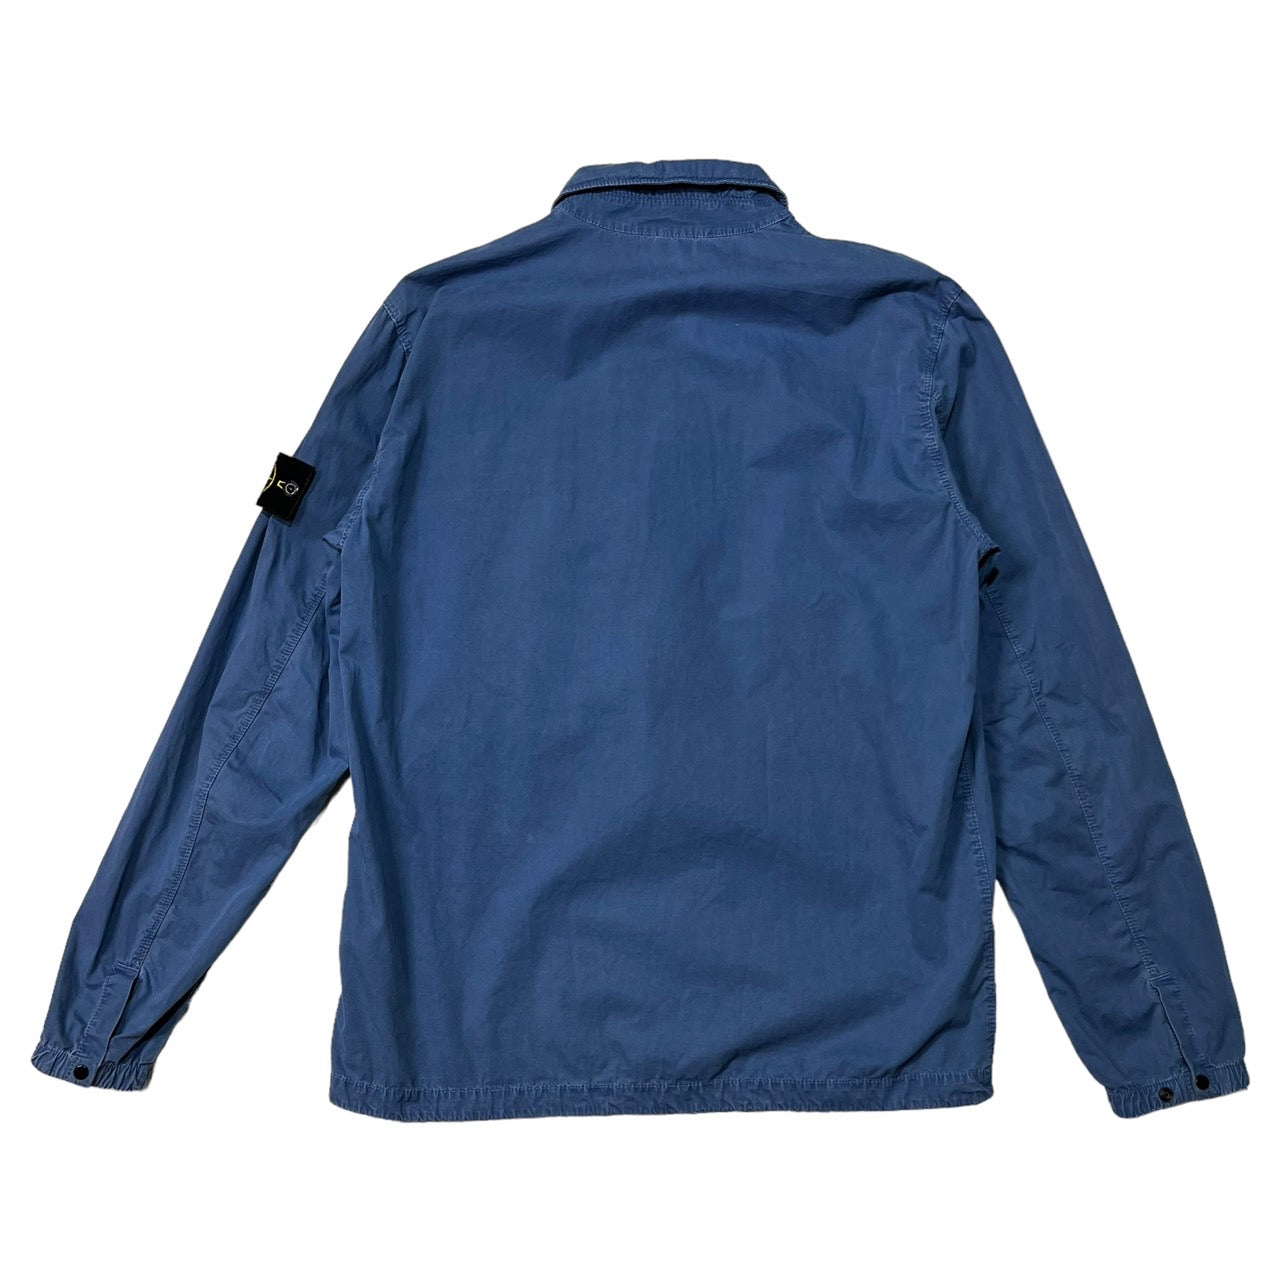 STONE ISLAND(ストーンアイランド) 20AW garment-dyed zip-up jacket ...